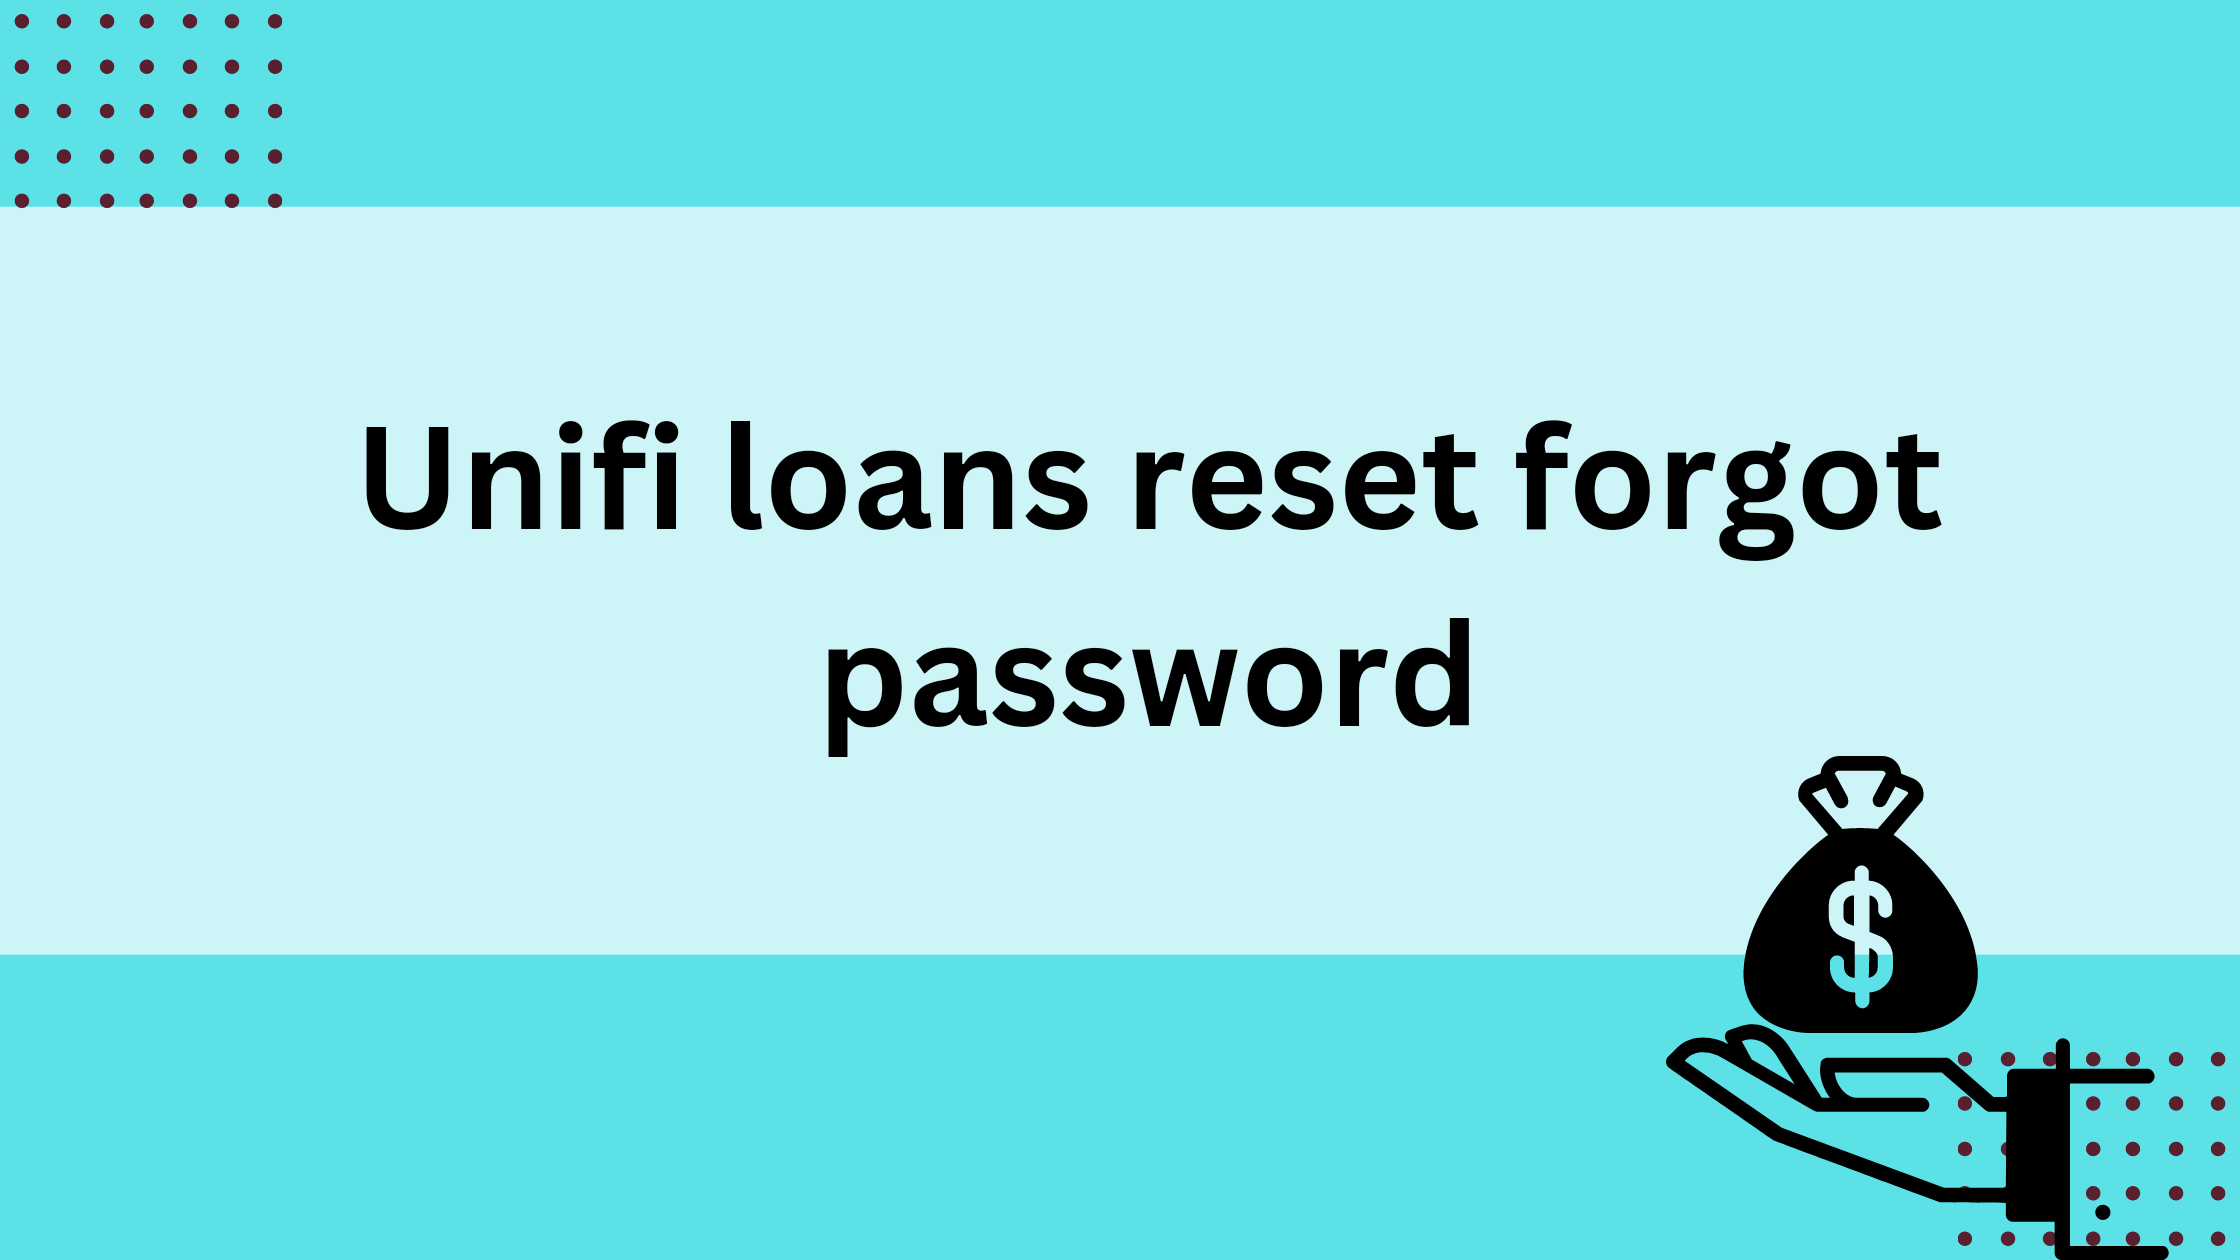 Unifi loans reset forgot password